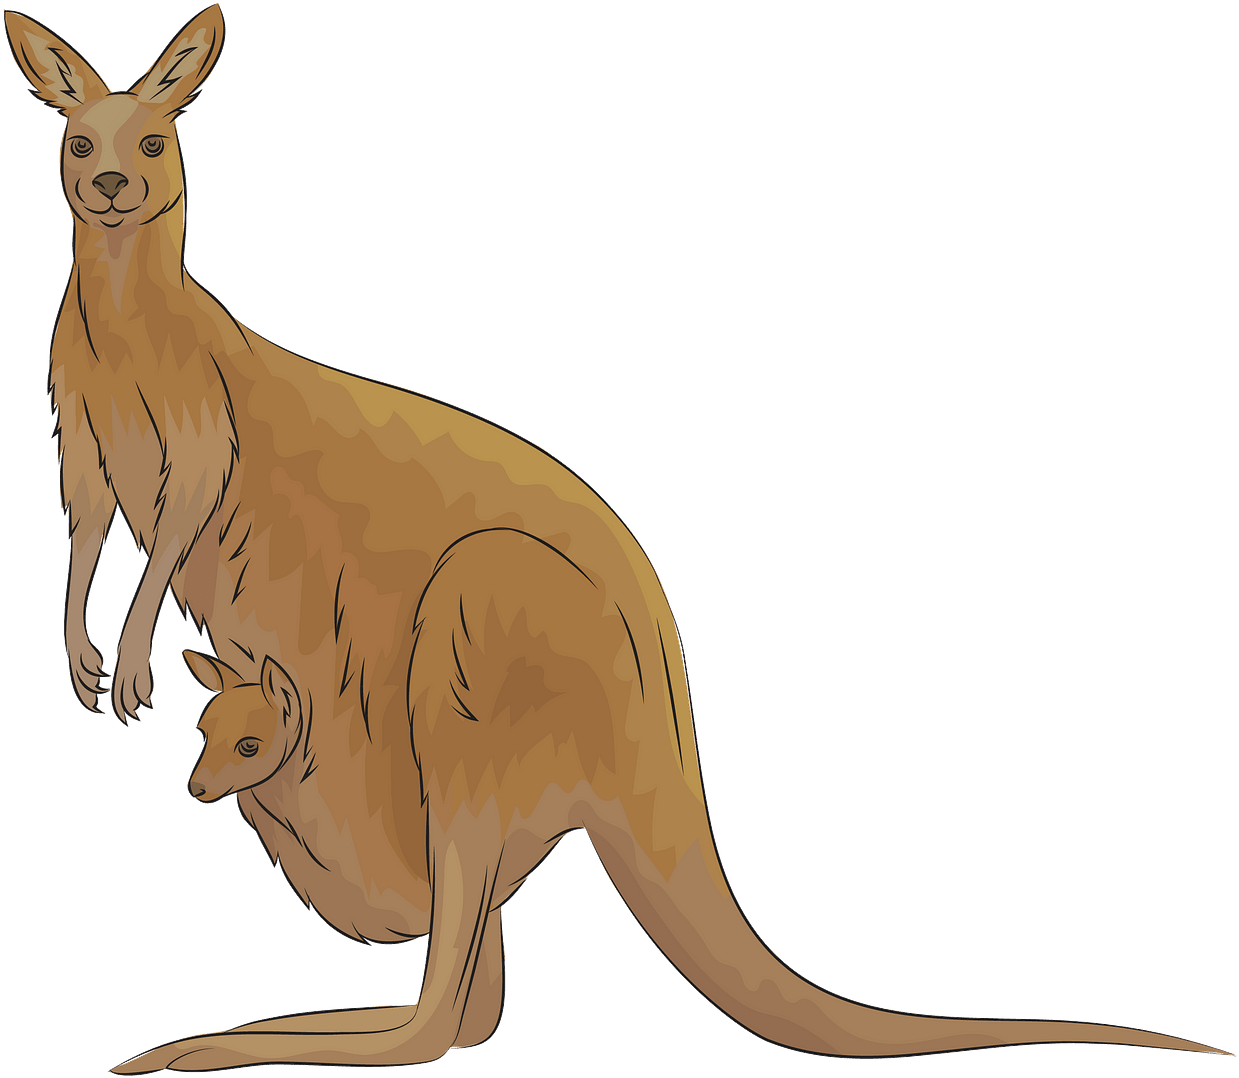 A Kangaroo With A Baby Kangaroo